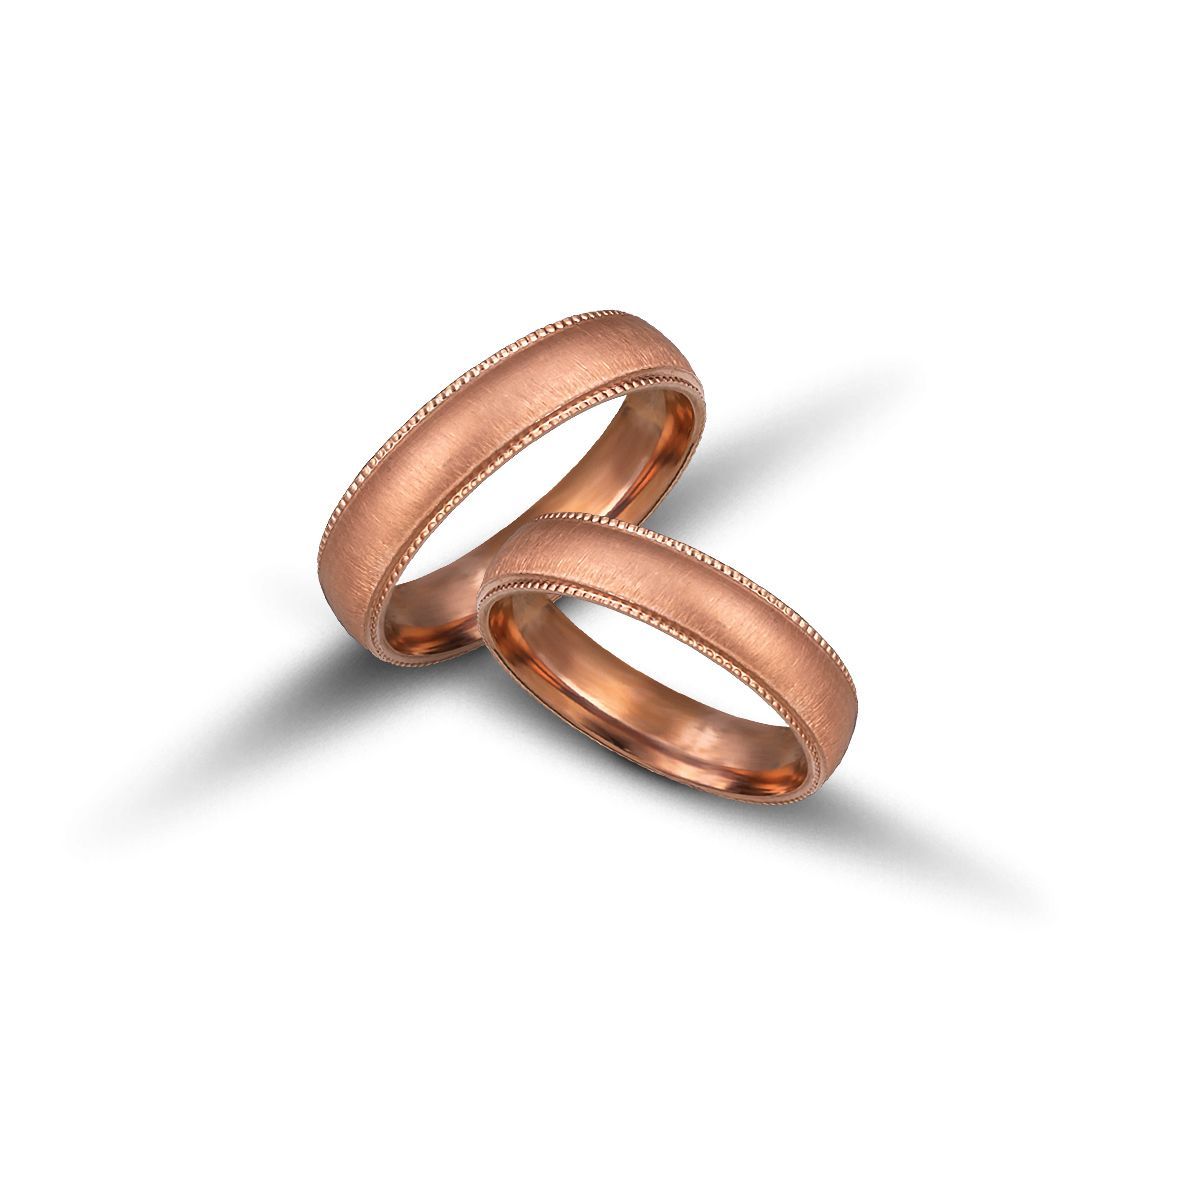 Rose gold wedding rings 4.5mm  (code VK2017/45)